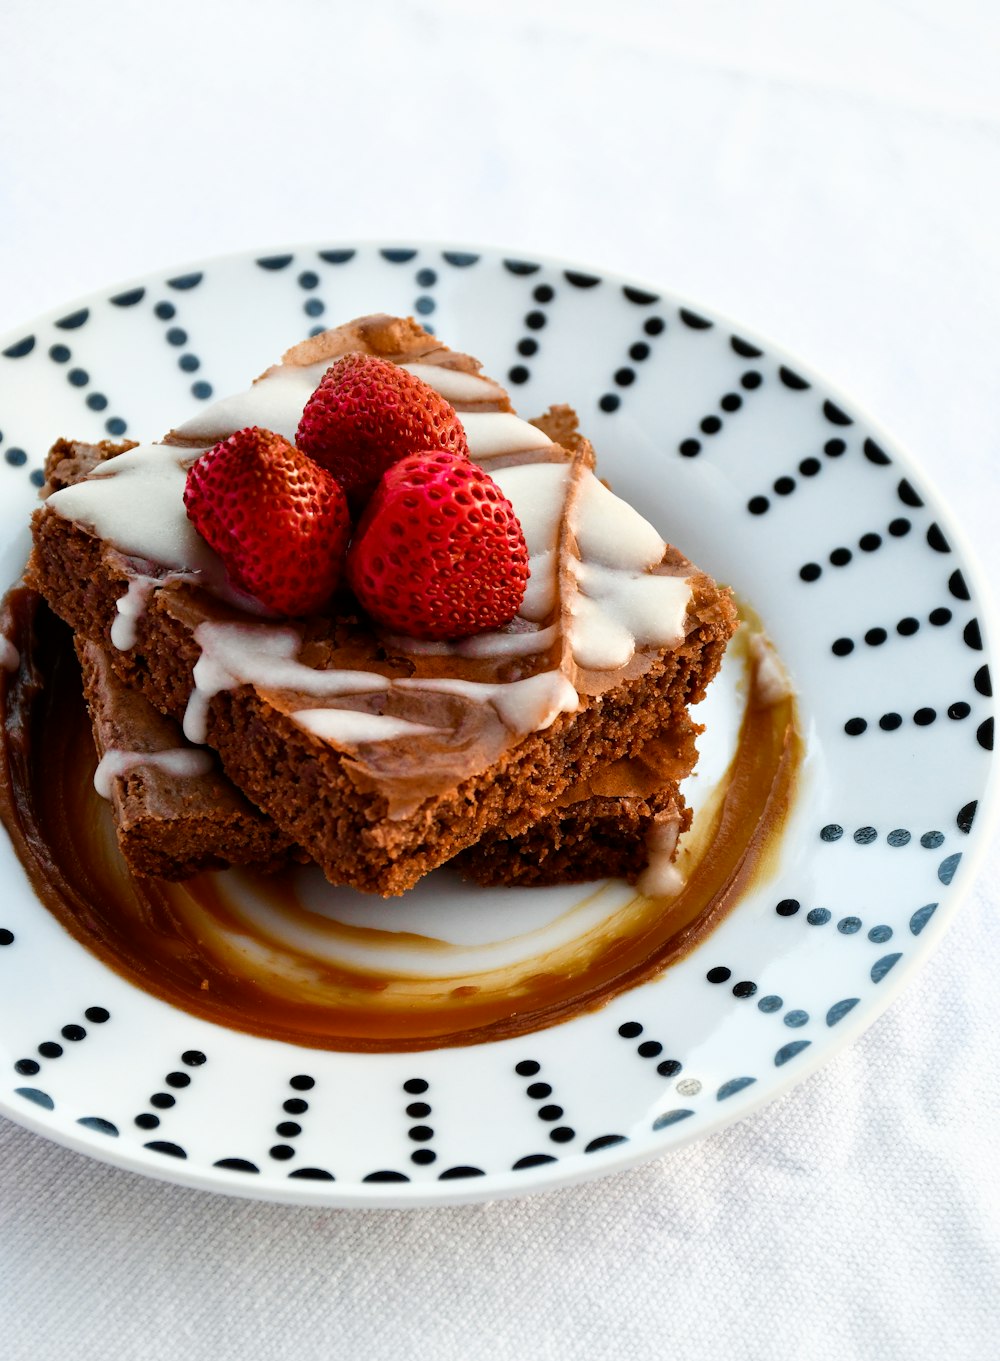 strawberry and chocolate cake on white ceramic plate